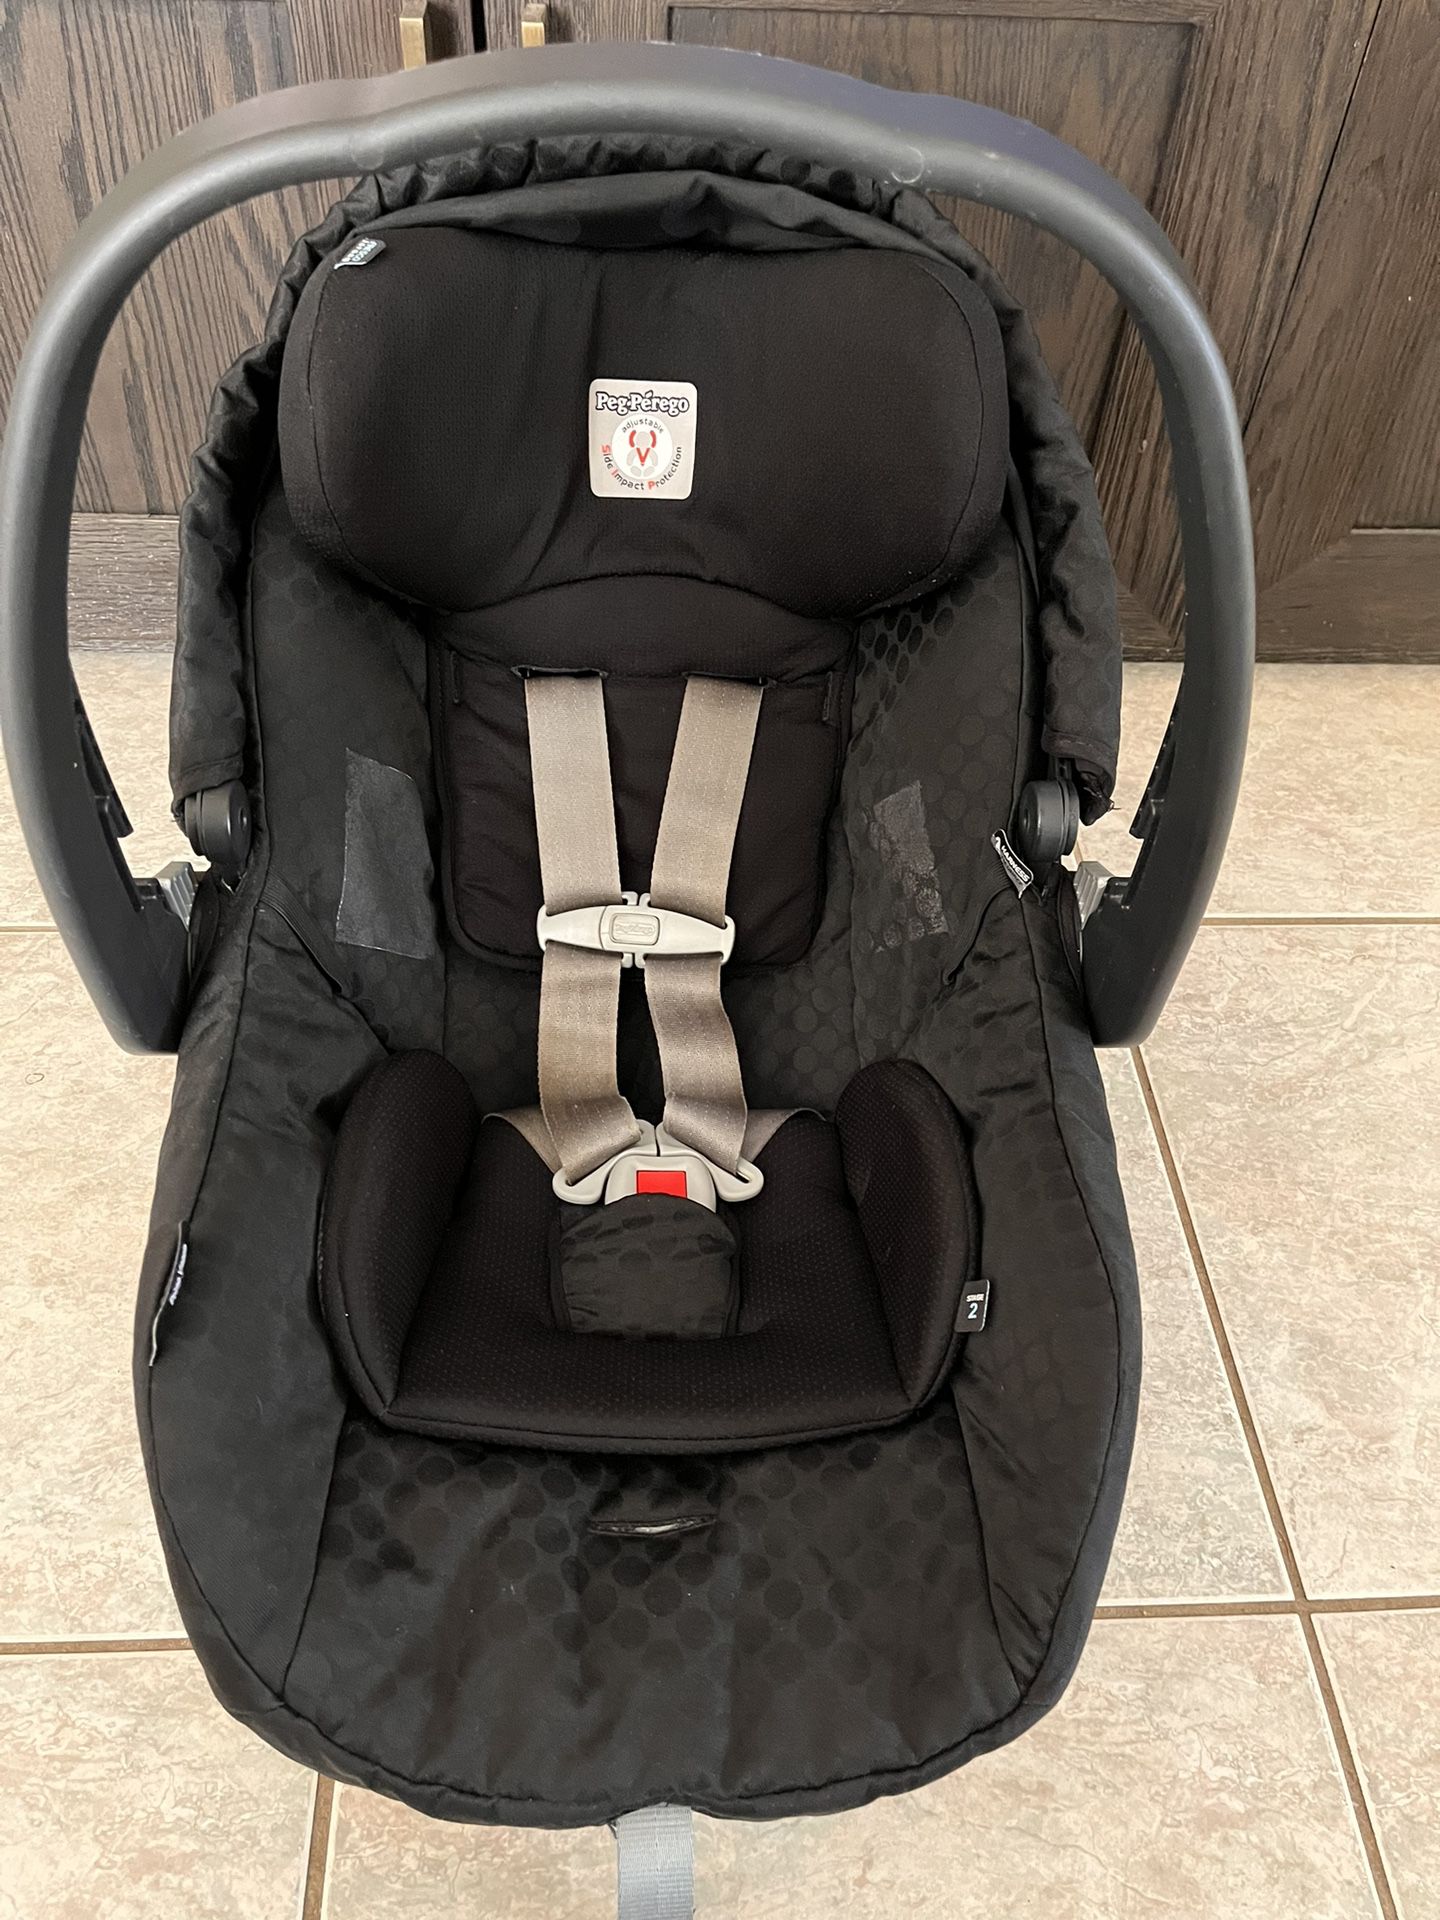 Per Perergo Infant Car Seat Black 